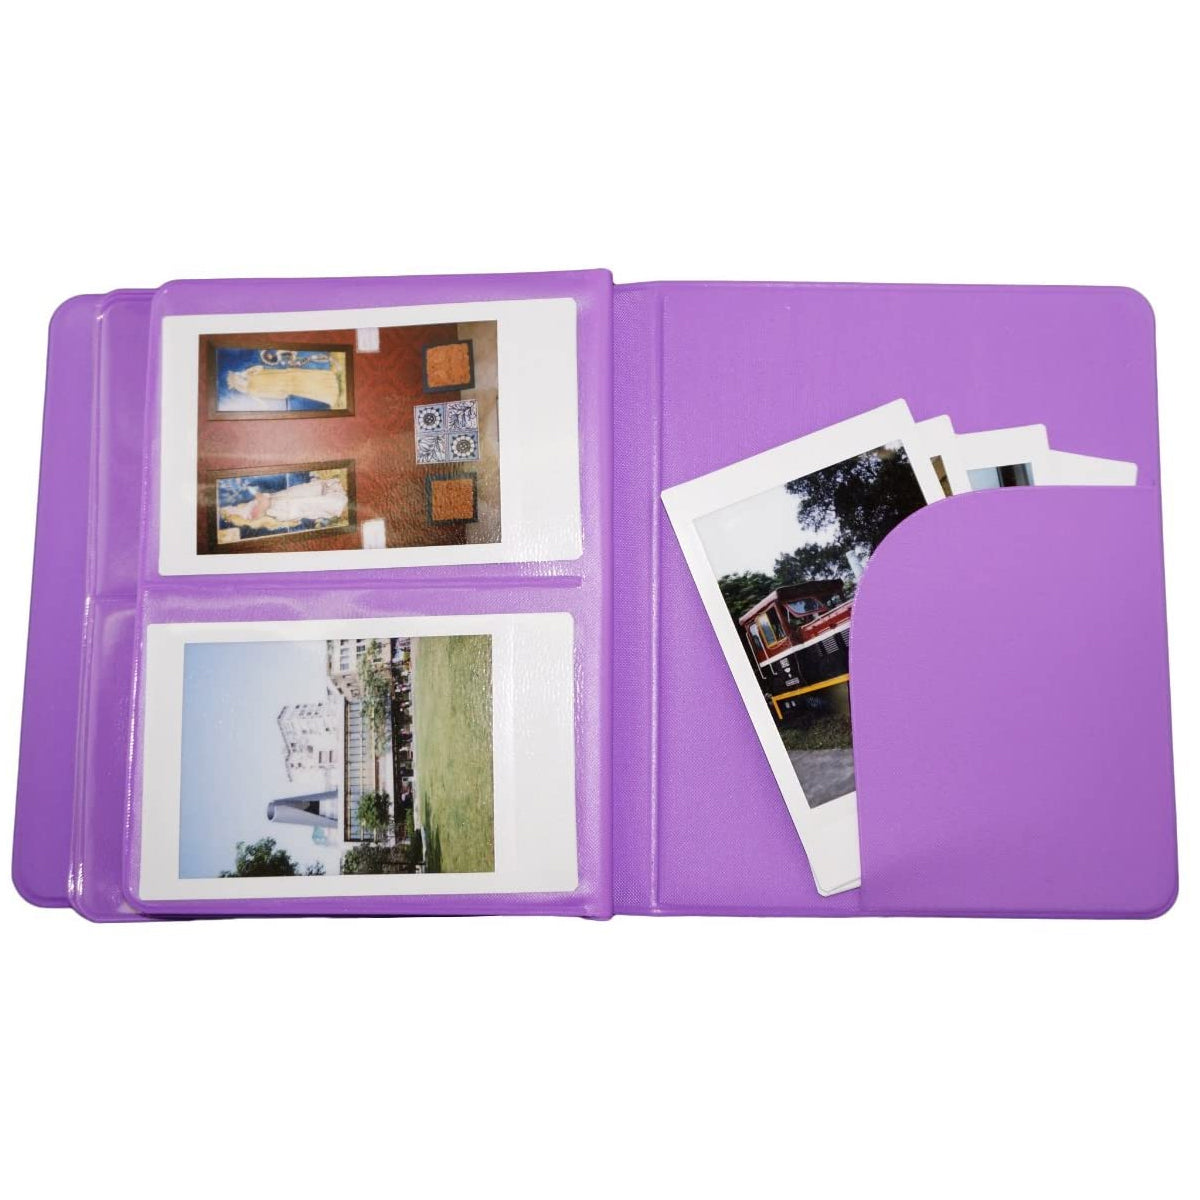 Fujifilm Instax Mini 10X1 macaron Instant Film with Instax Time Photo Album 64 Sheets (Violet Purple)